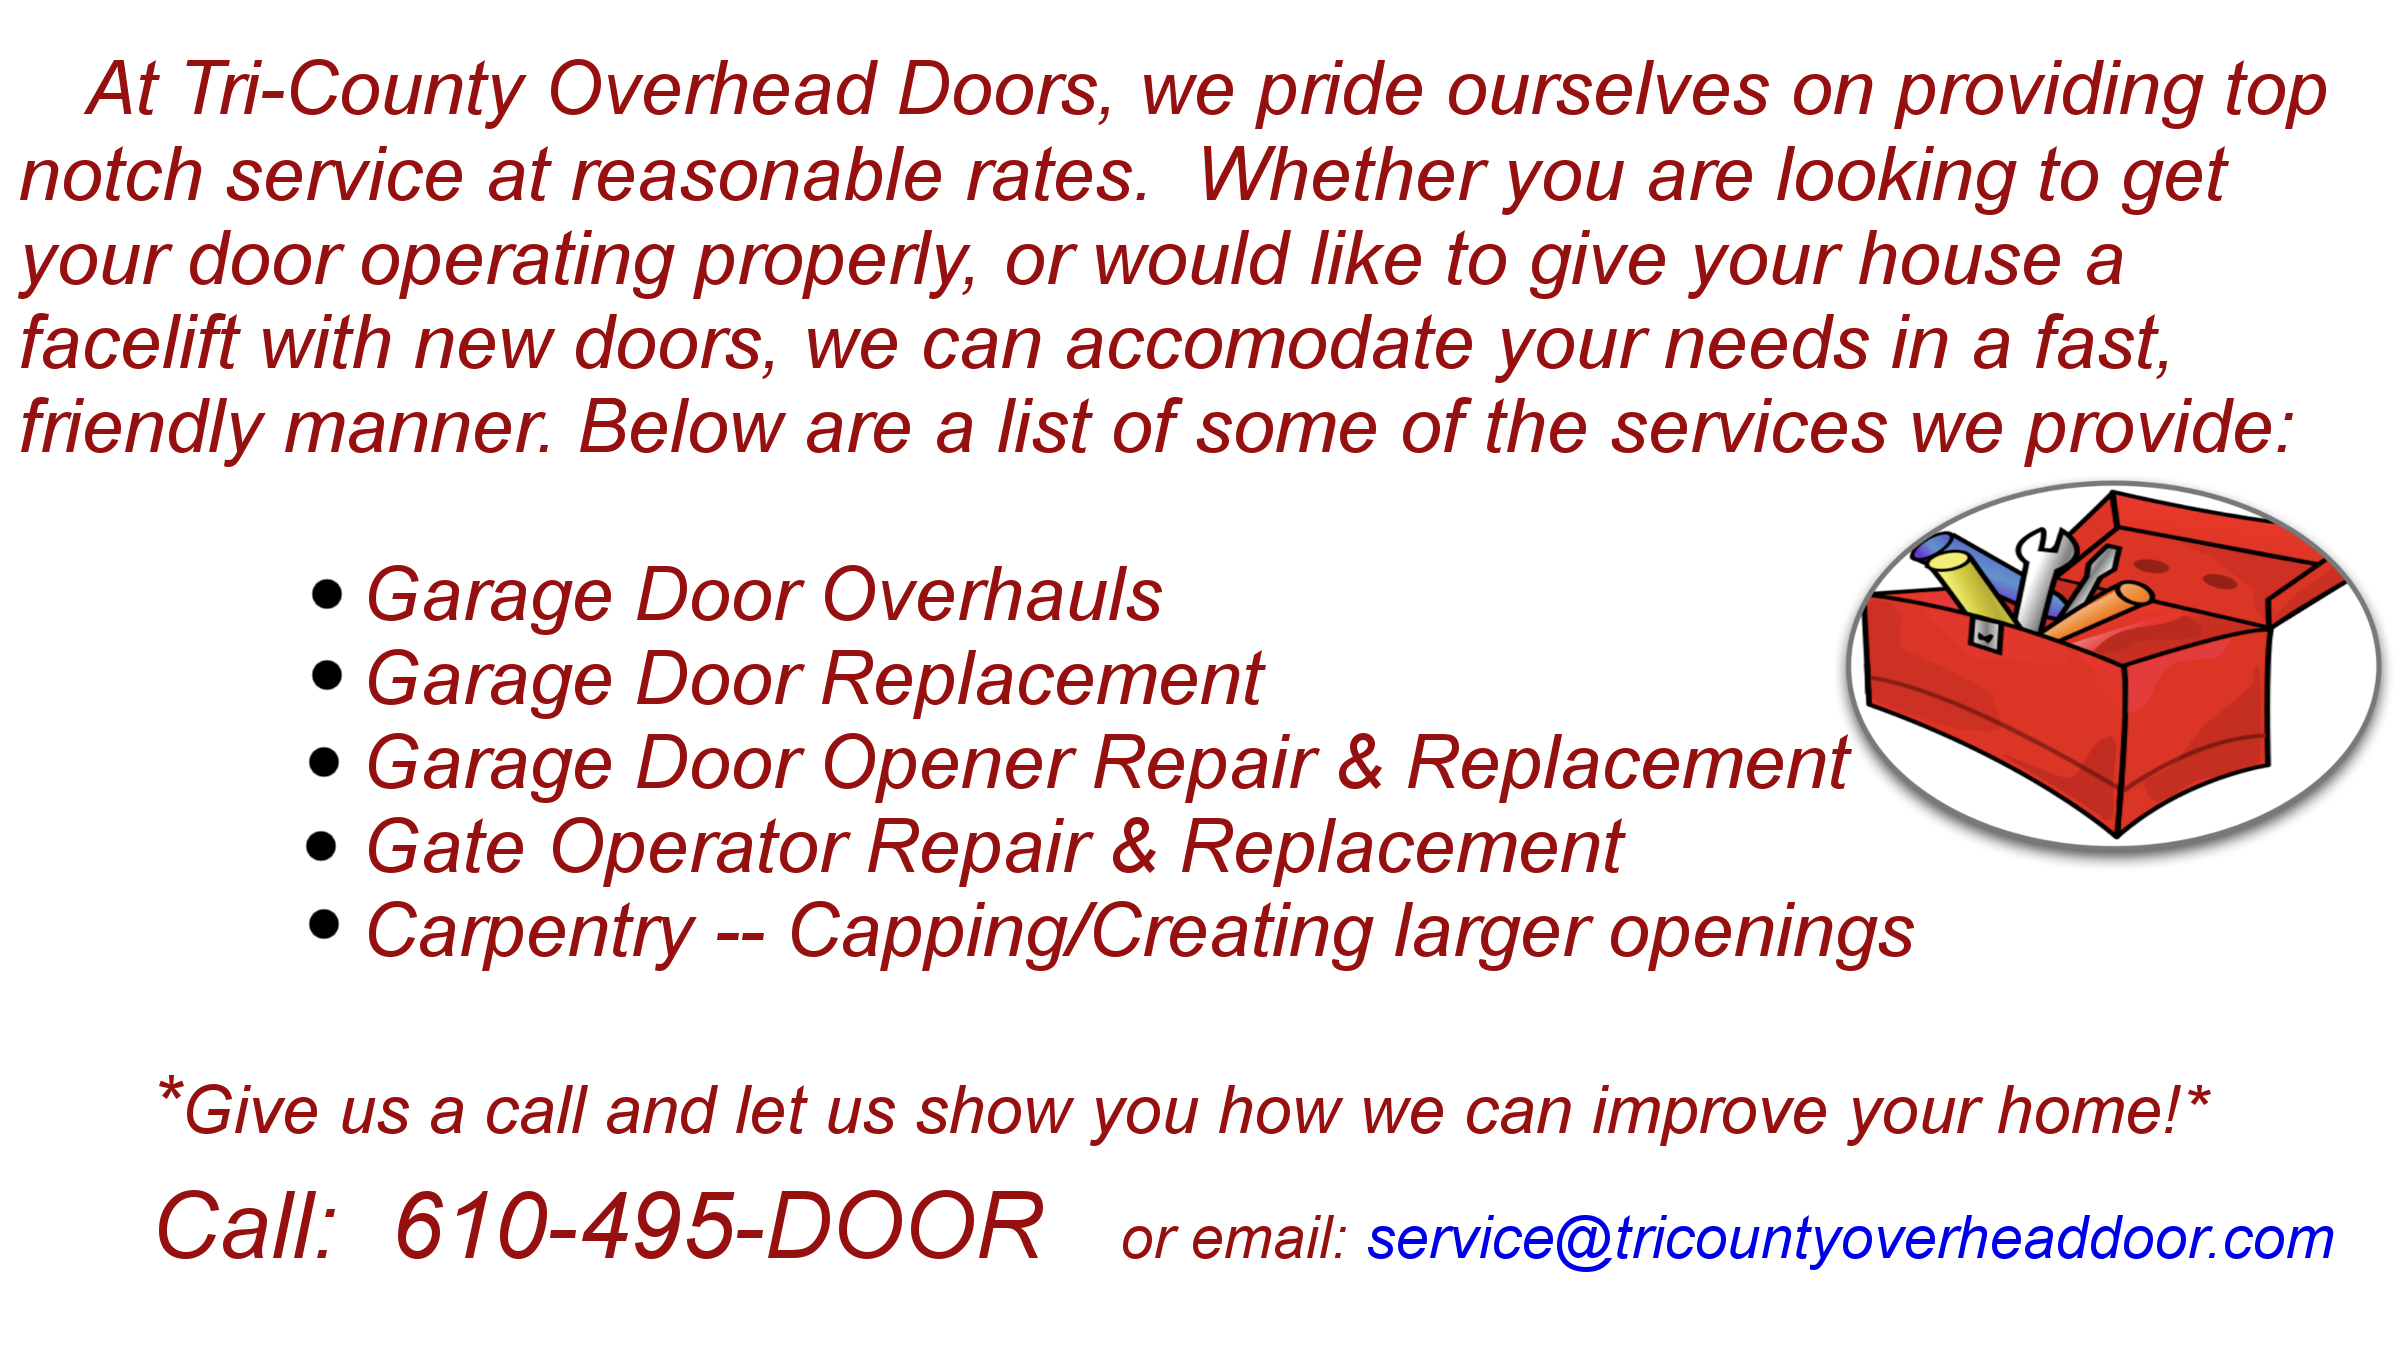 Contact Tri-County Overhead Doors